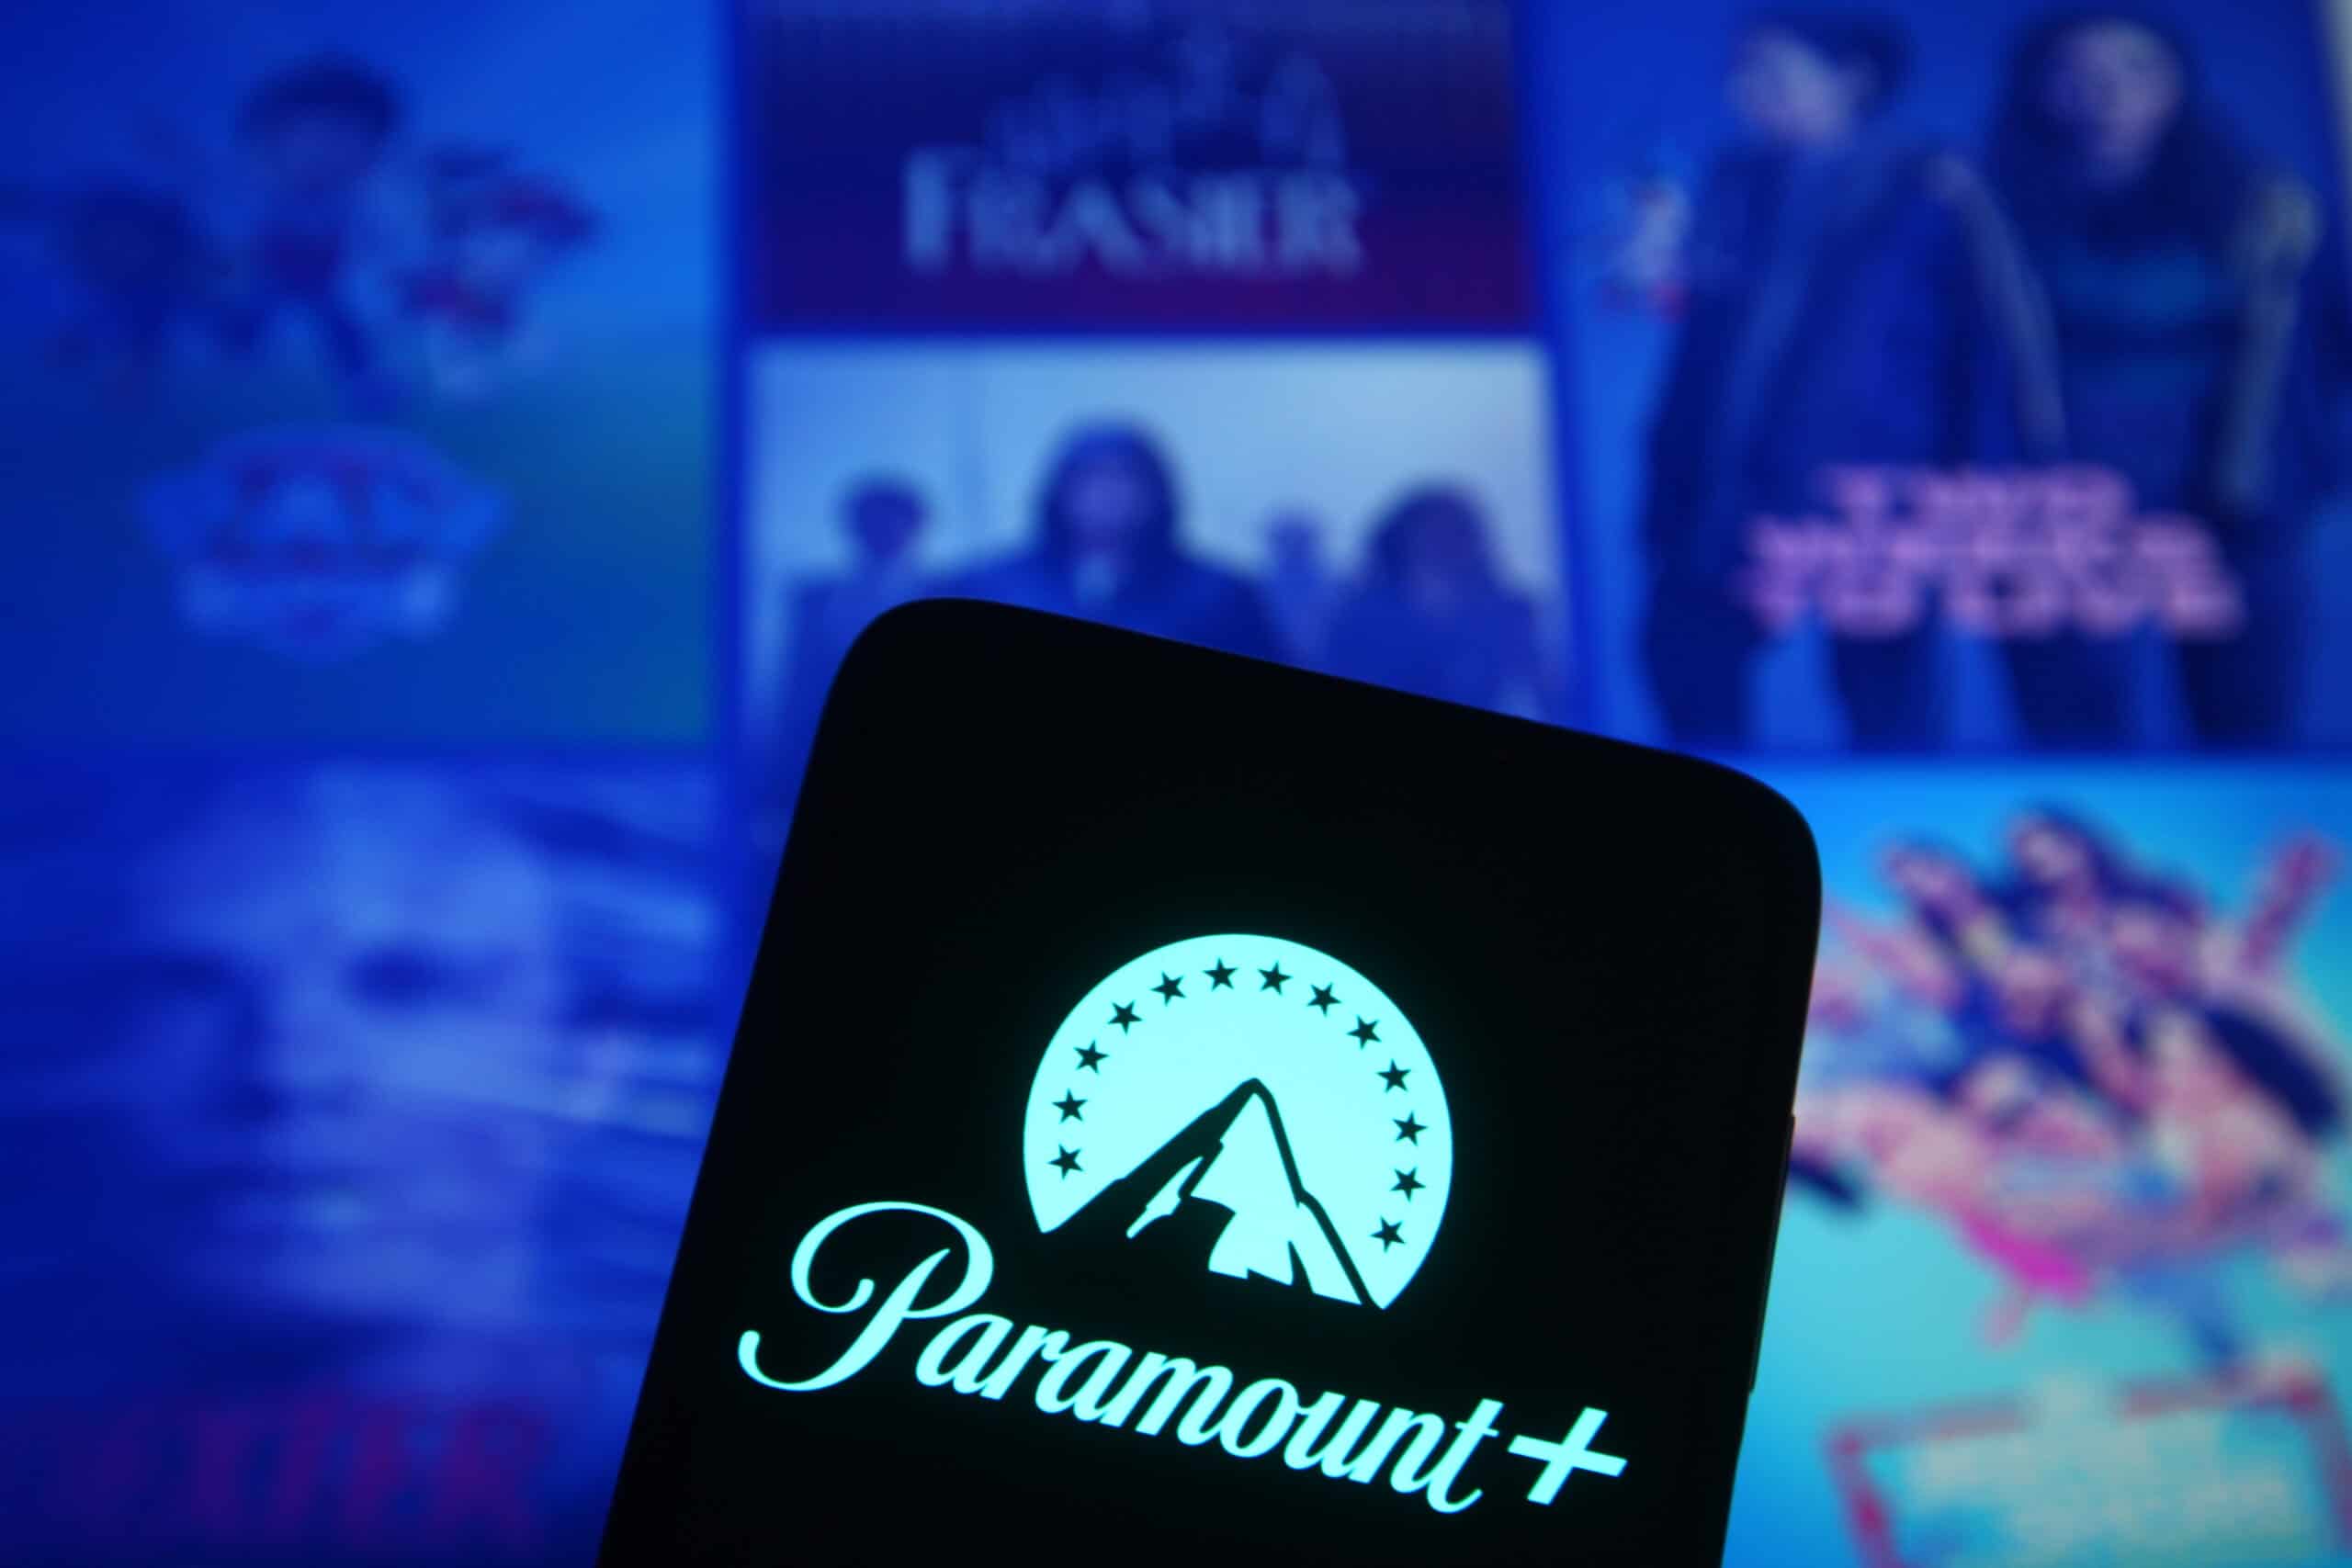 Paramount+ plus streaming service